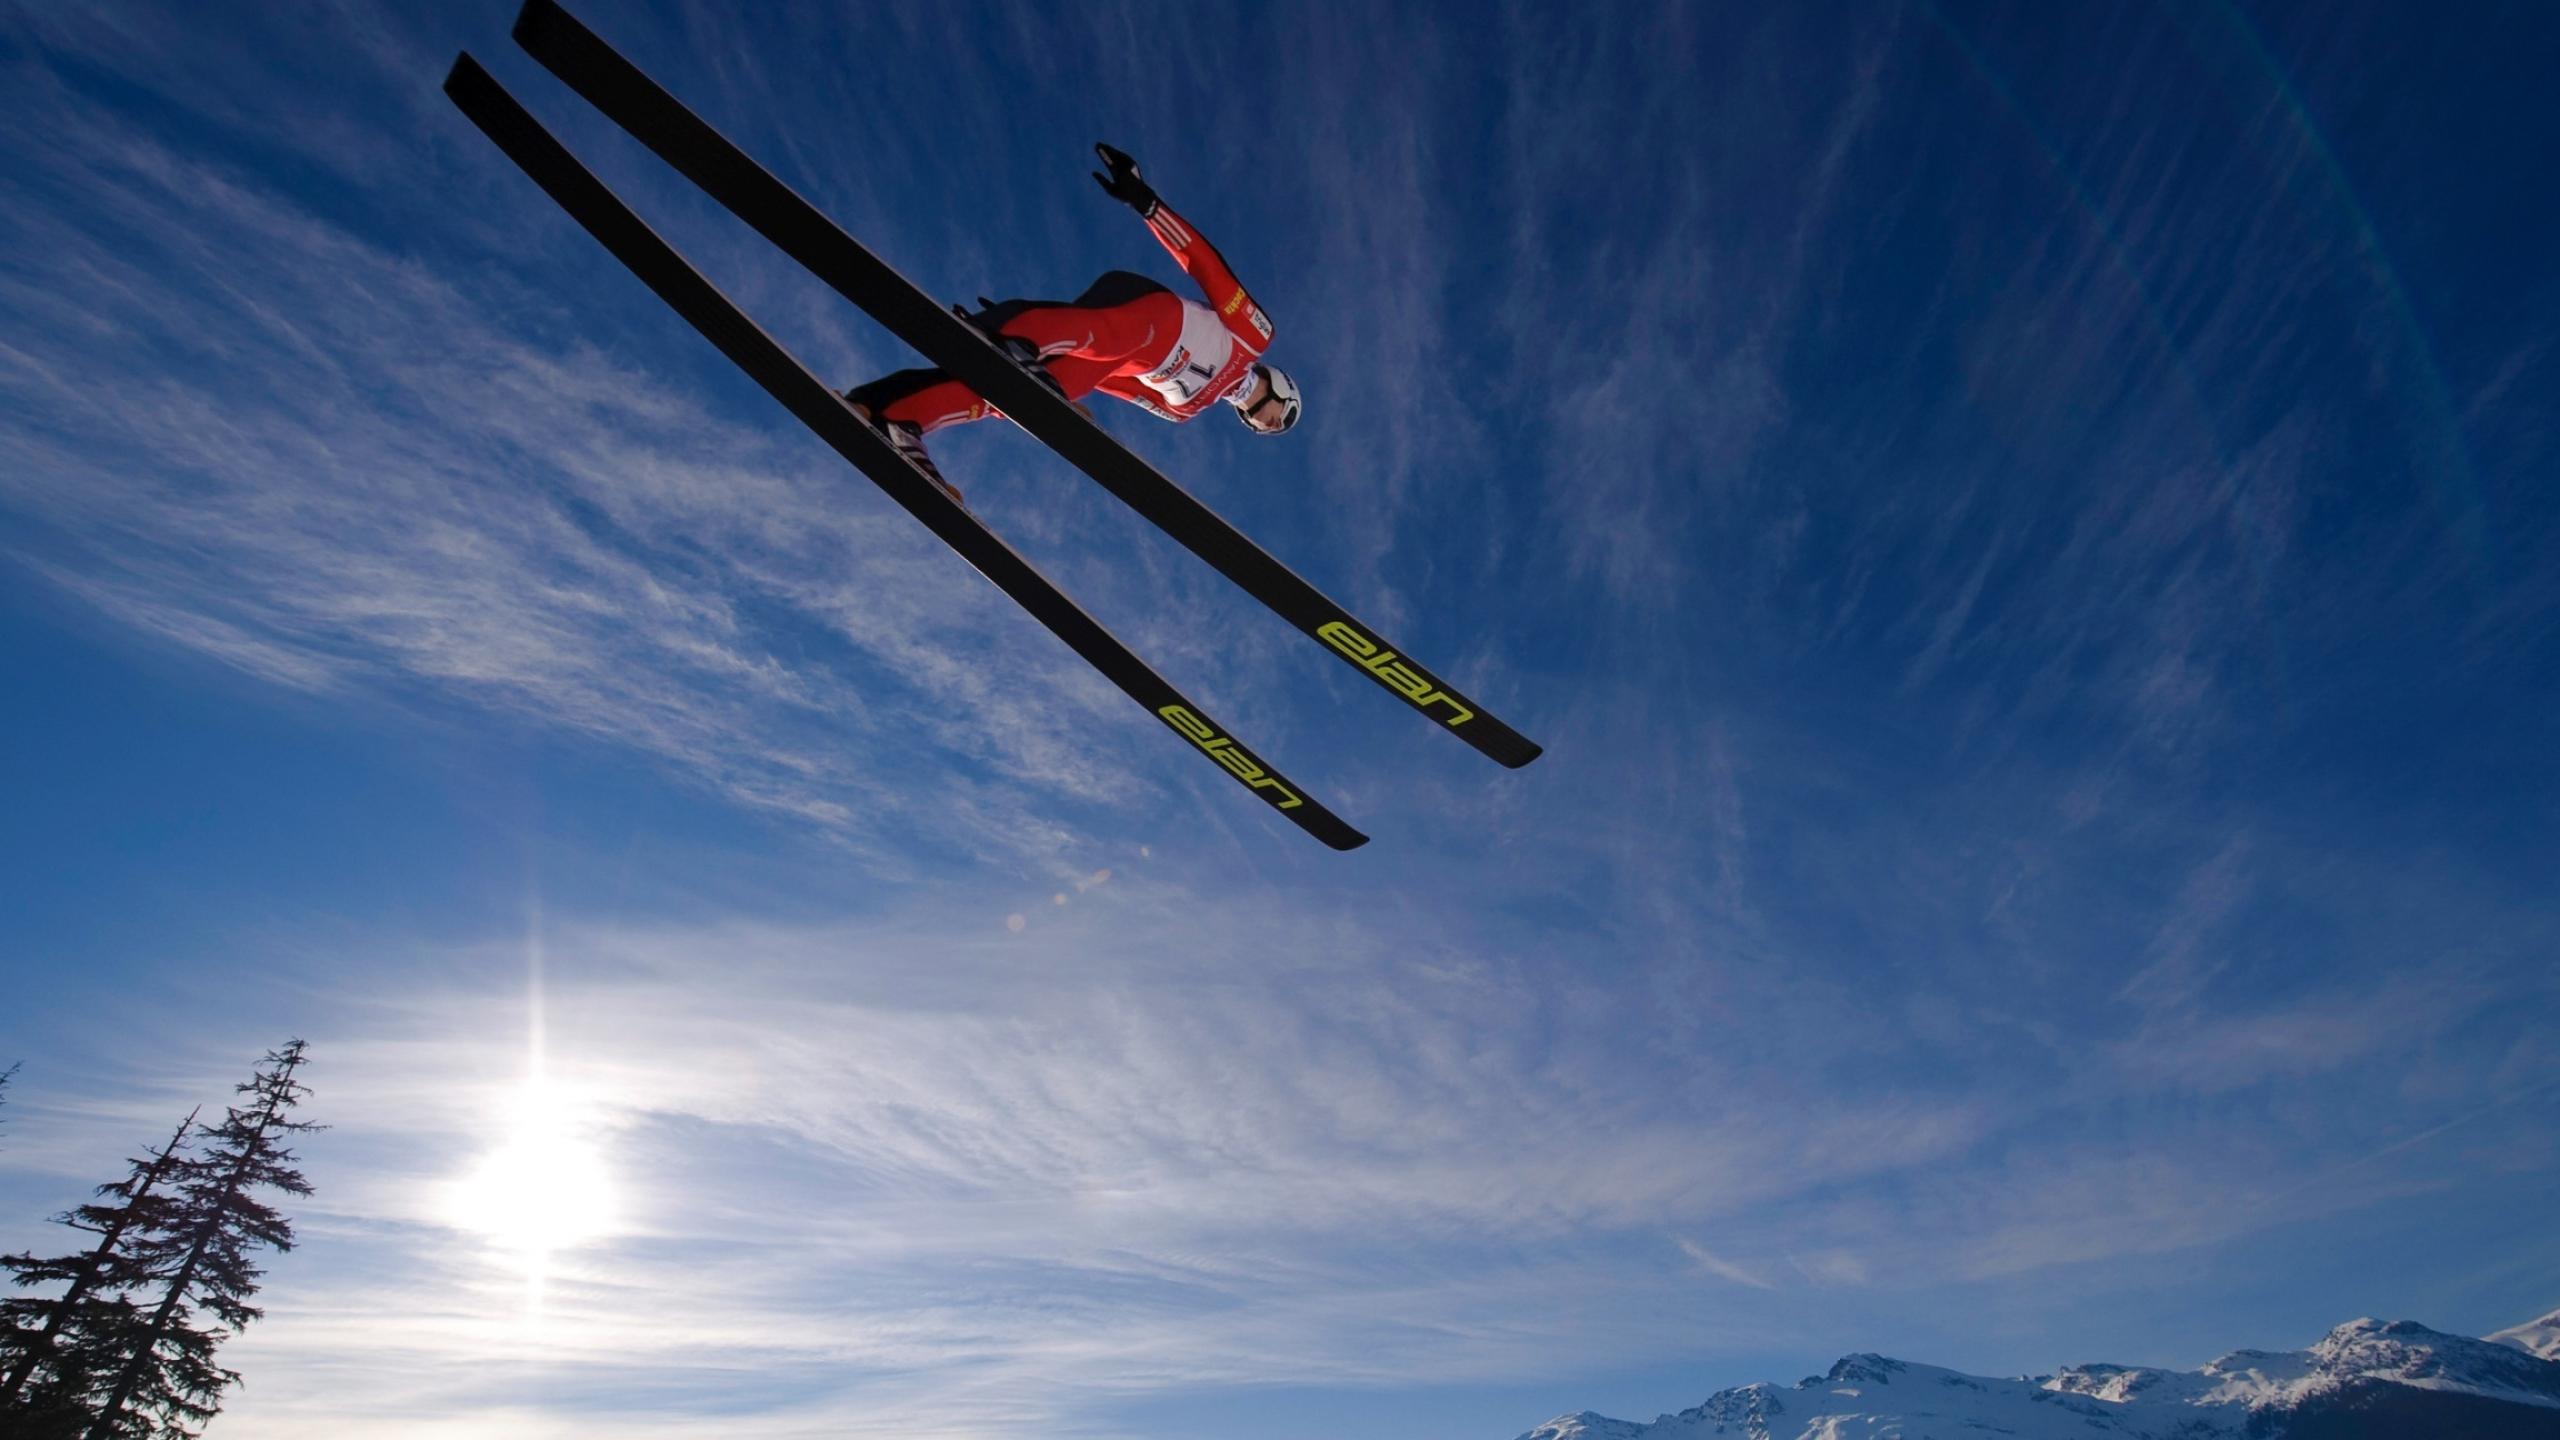 Jumping: Ski jumping, Cyclic winter sport, Mountain skiing, Flight on skis. 2560x1440 HD Wallpaper.